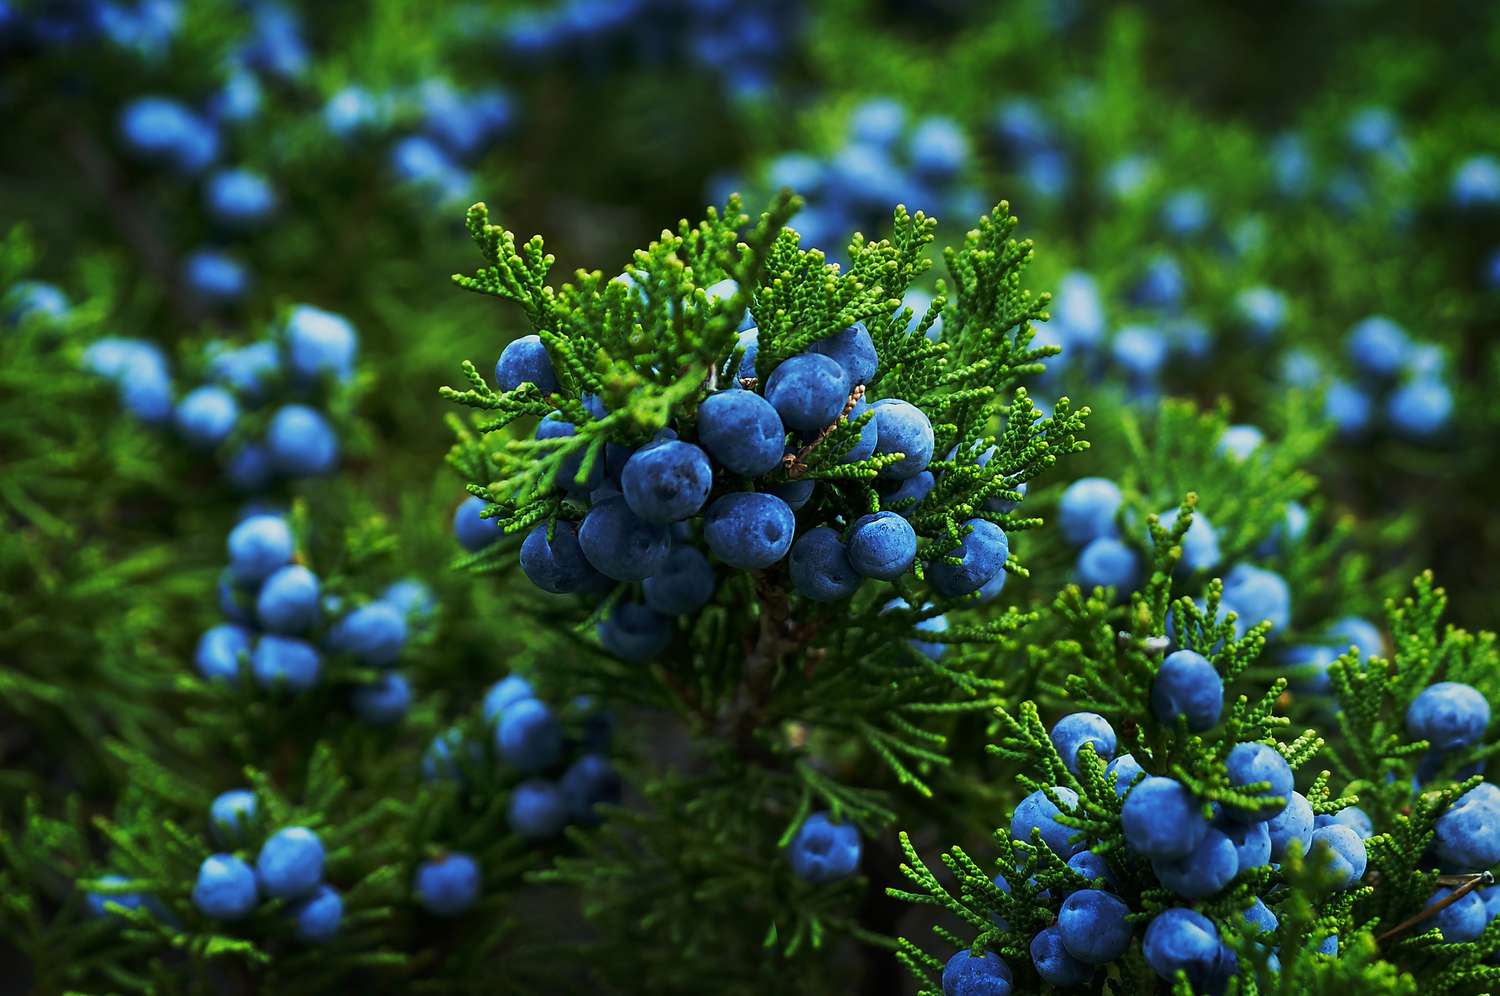 12 Facts About Juniper Berries - Facts.net